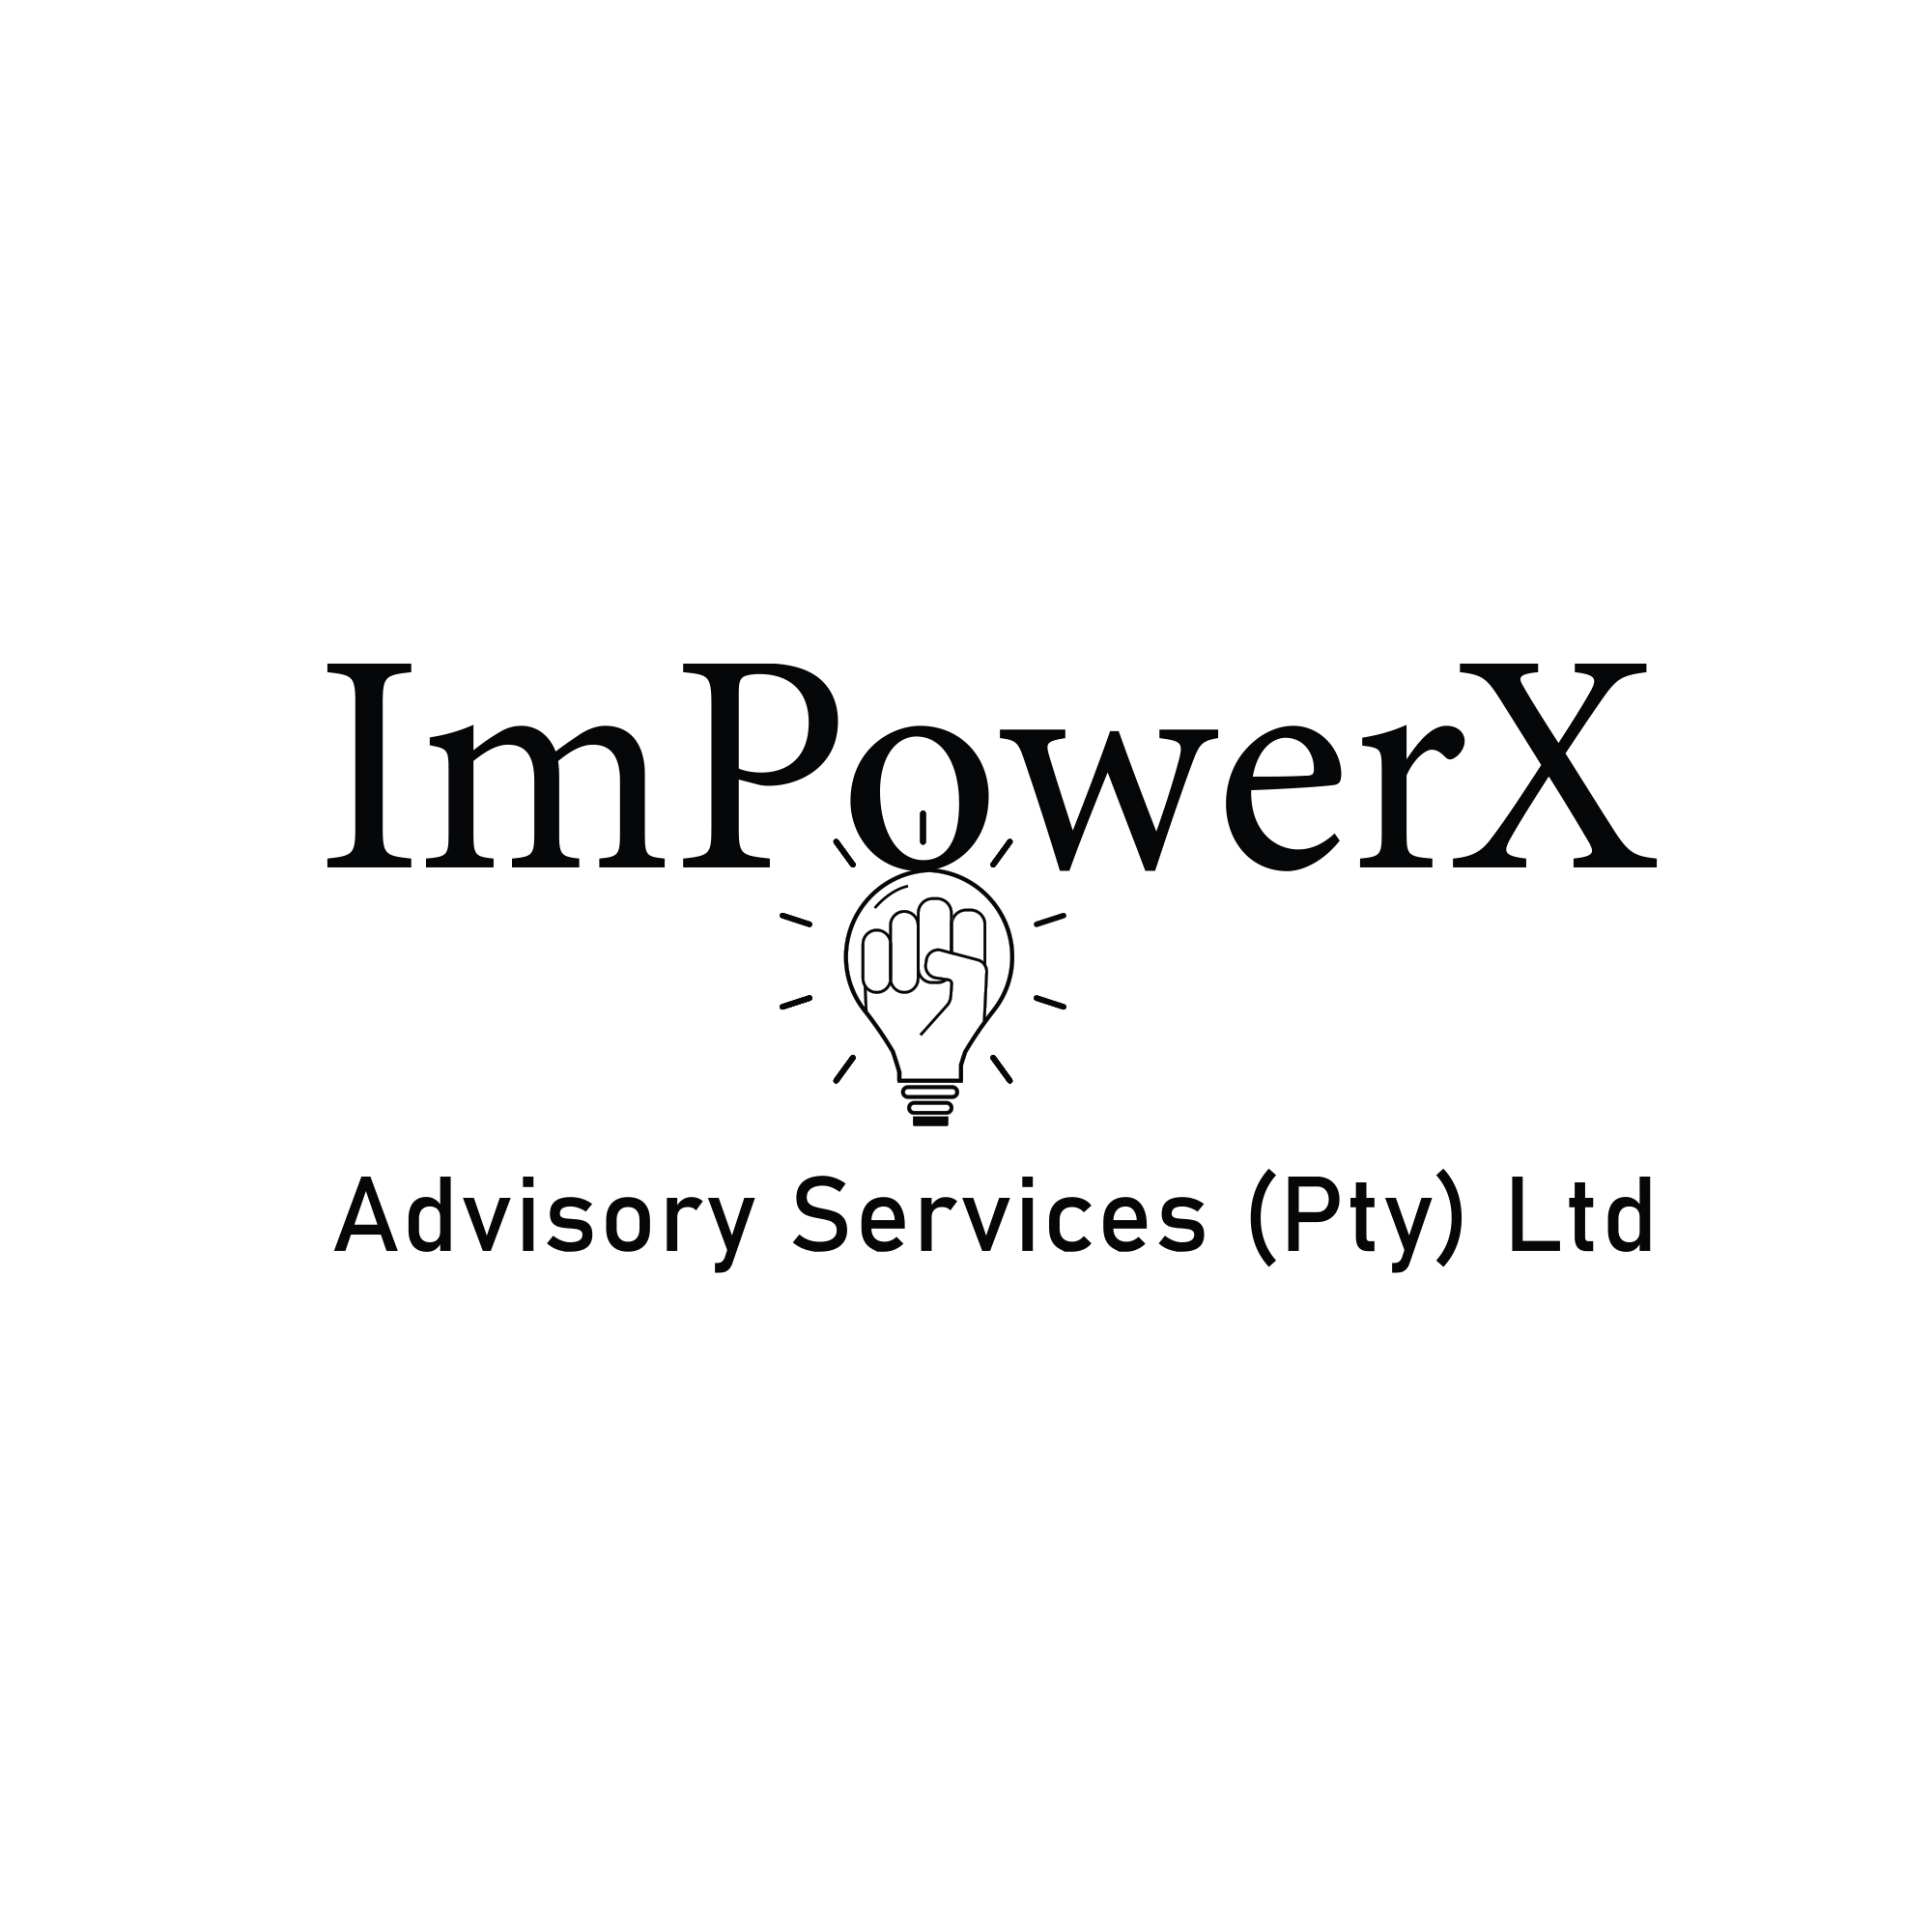 ImPowerX Advisory Services